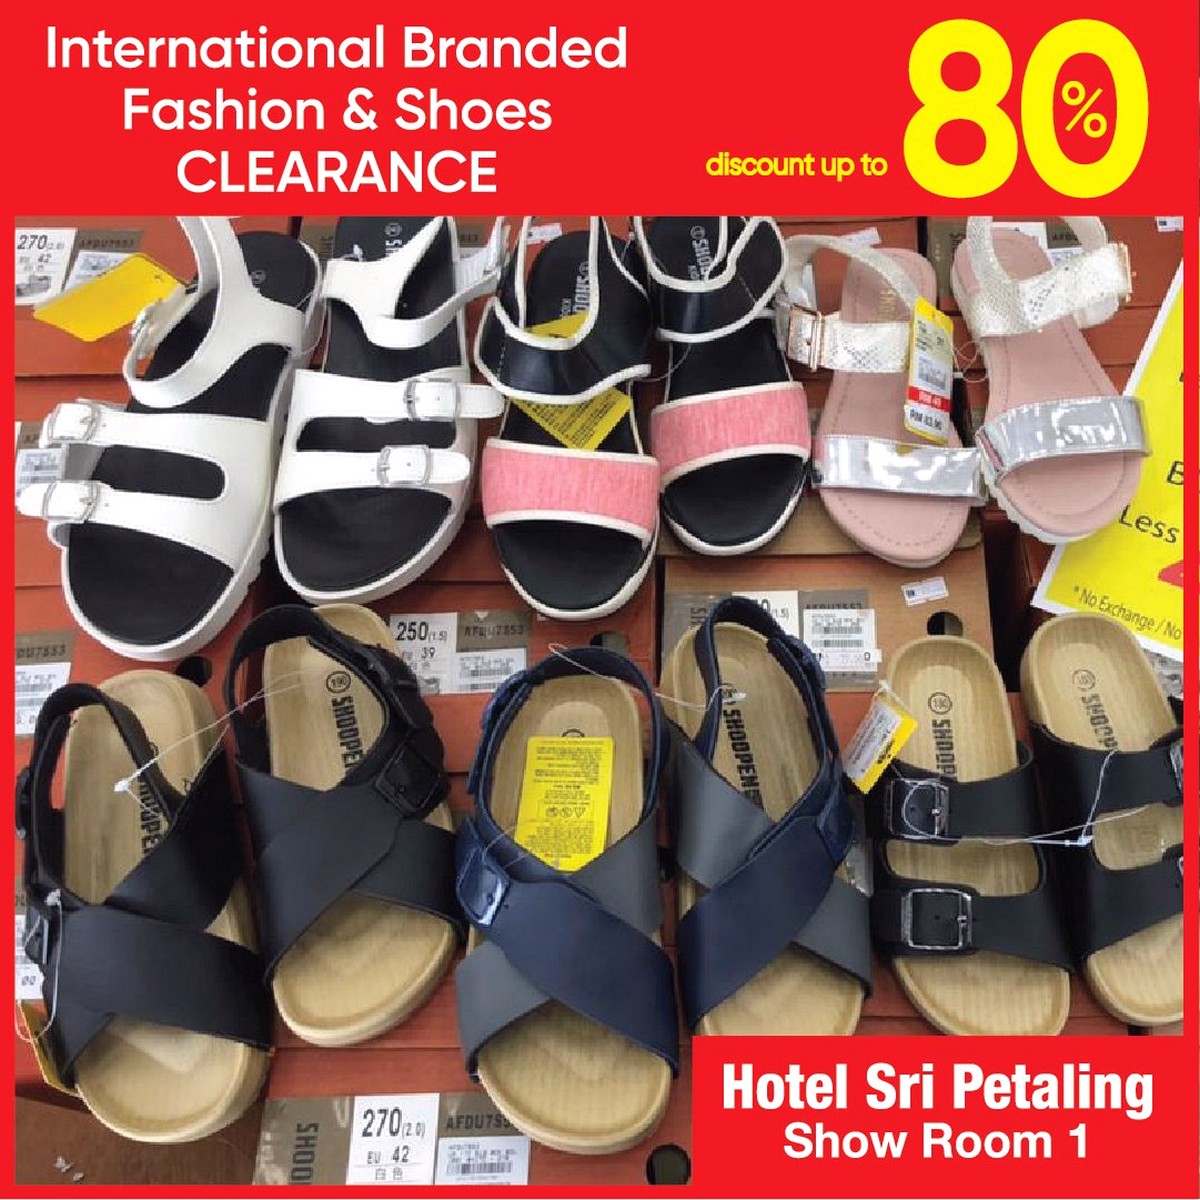 Hotel-Sri-Petaling-Warehouse-Sale-2021-14 - Apparels Fashion Accessories Fashion Lifestyle & Department Store Kuala Lumpur Selangor Warehouse Sale & Clearance in Malaysia 